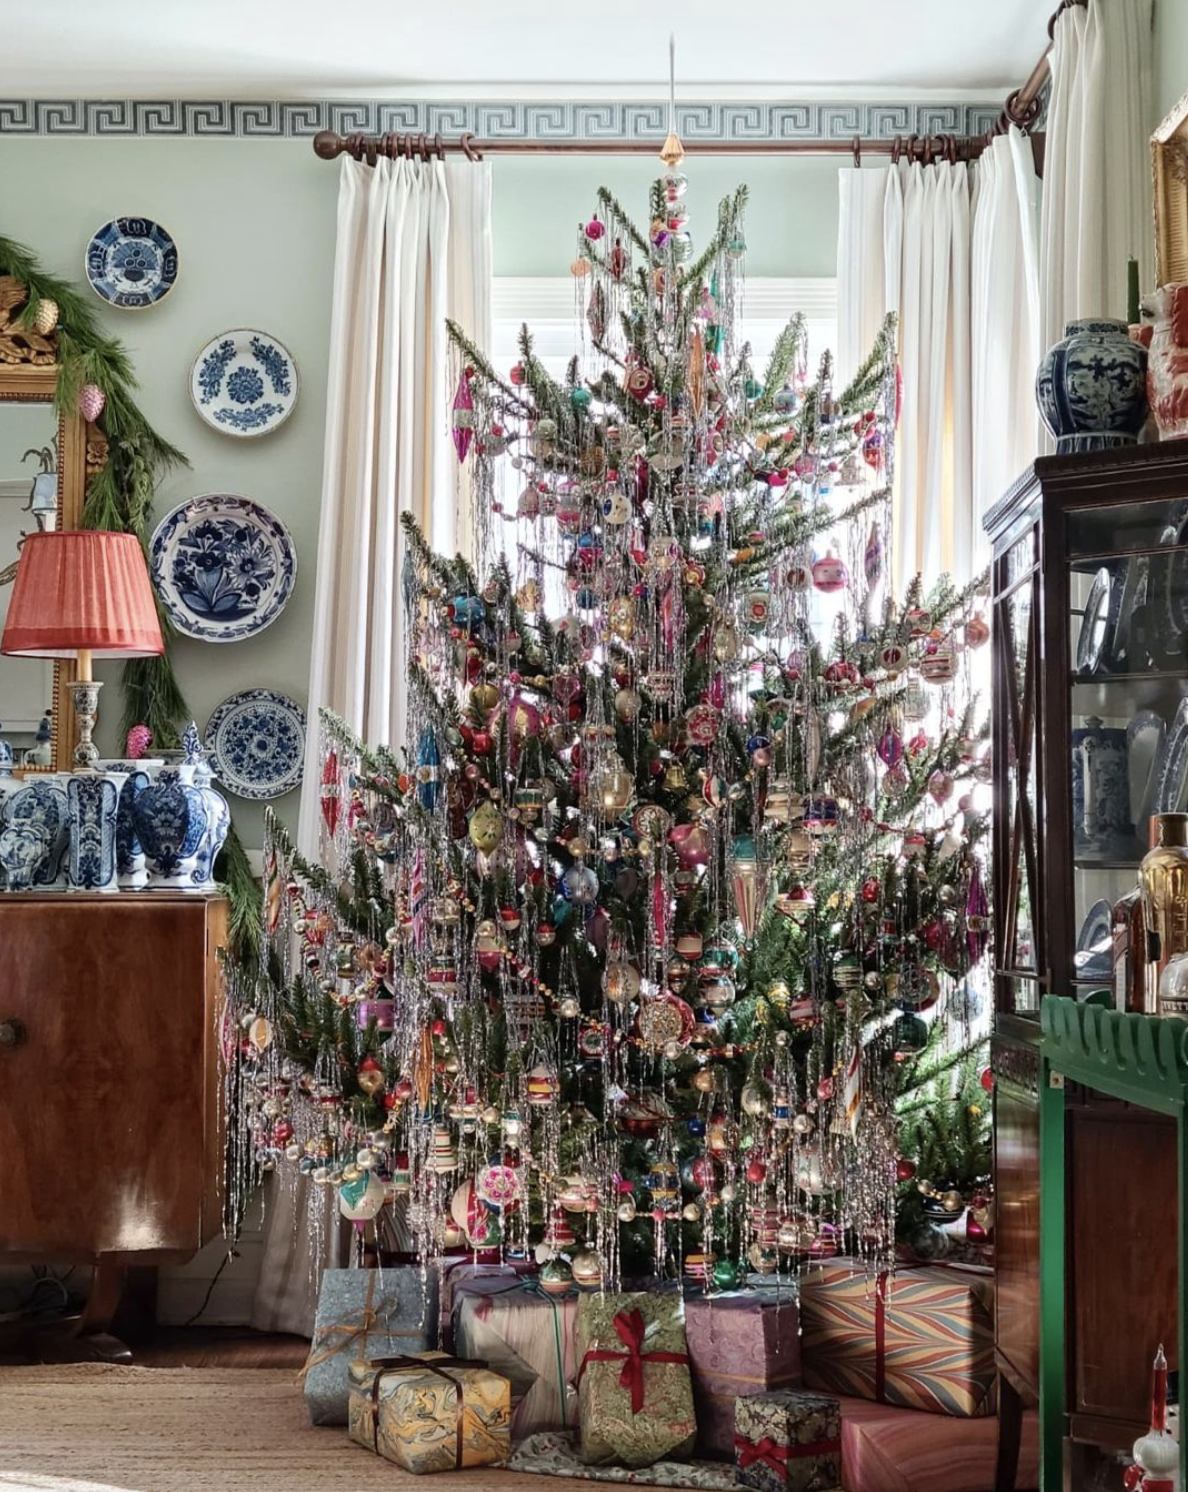 Vintage Ceramic Christmas Trees - Kelly Elko